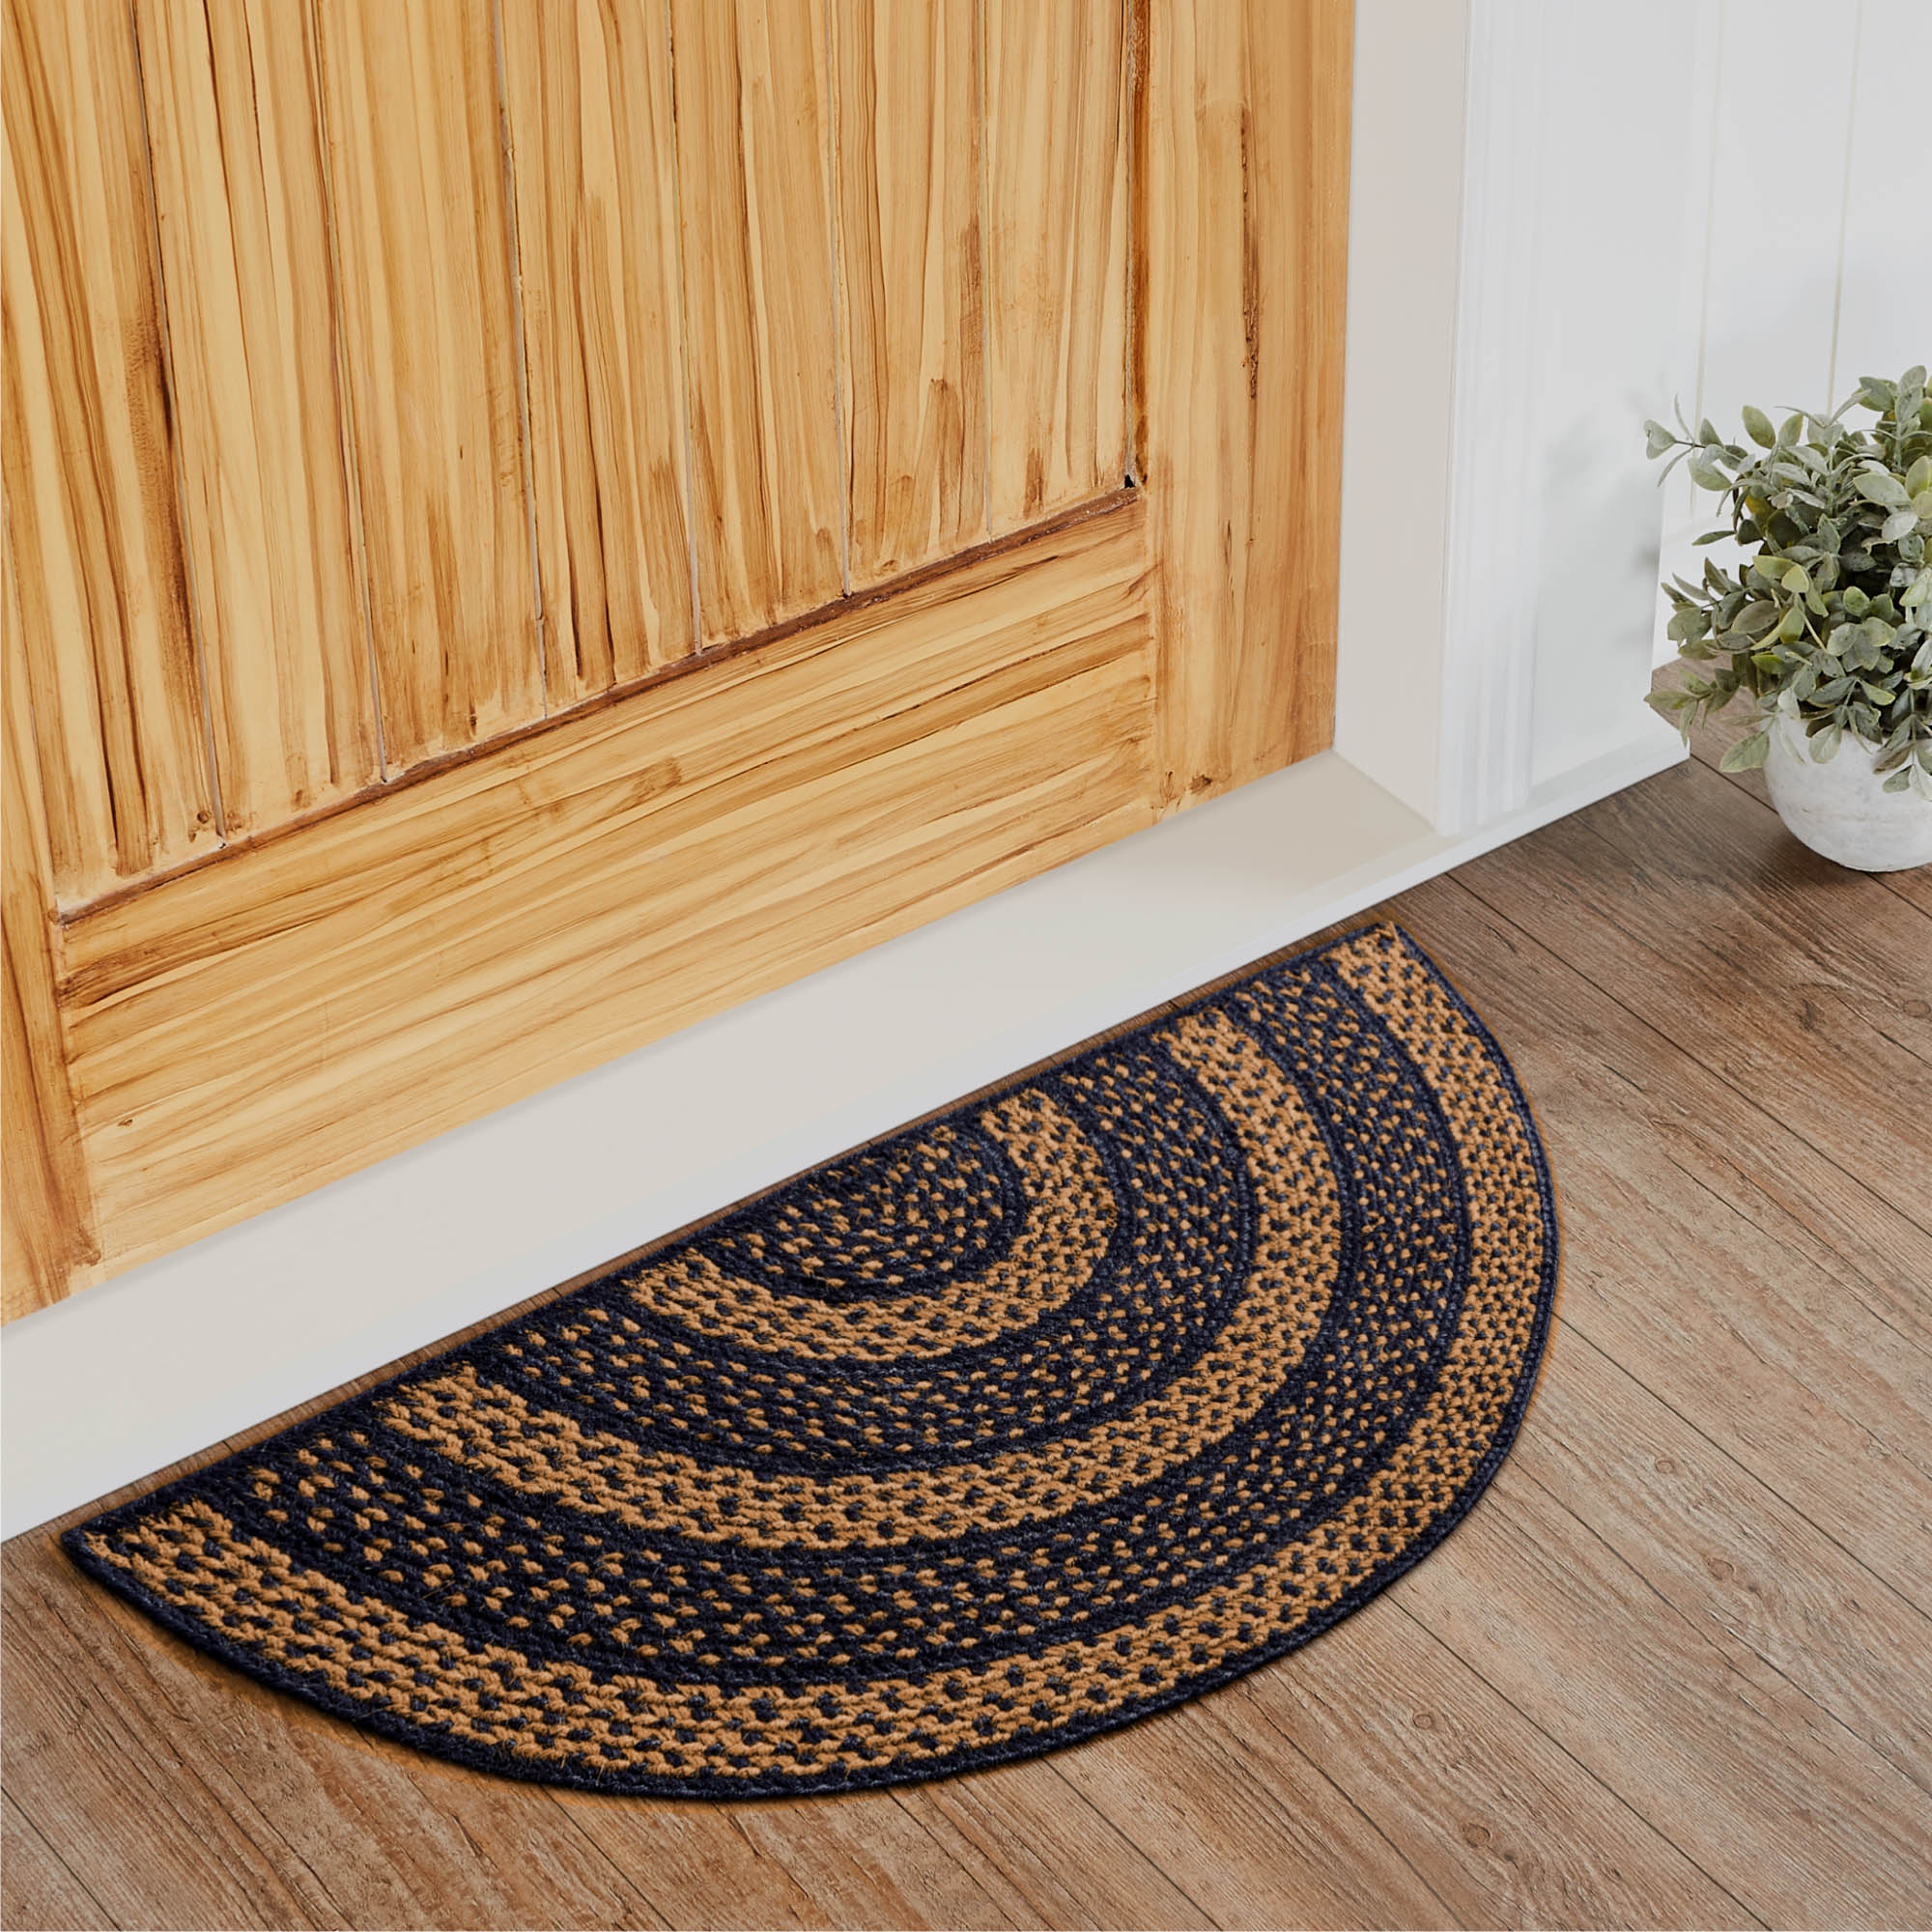 Semicircular Floor Carpet Mat Half Round Entrance Door Rug Non